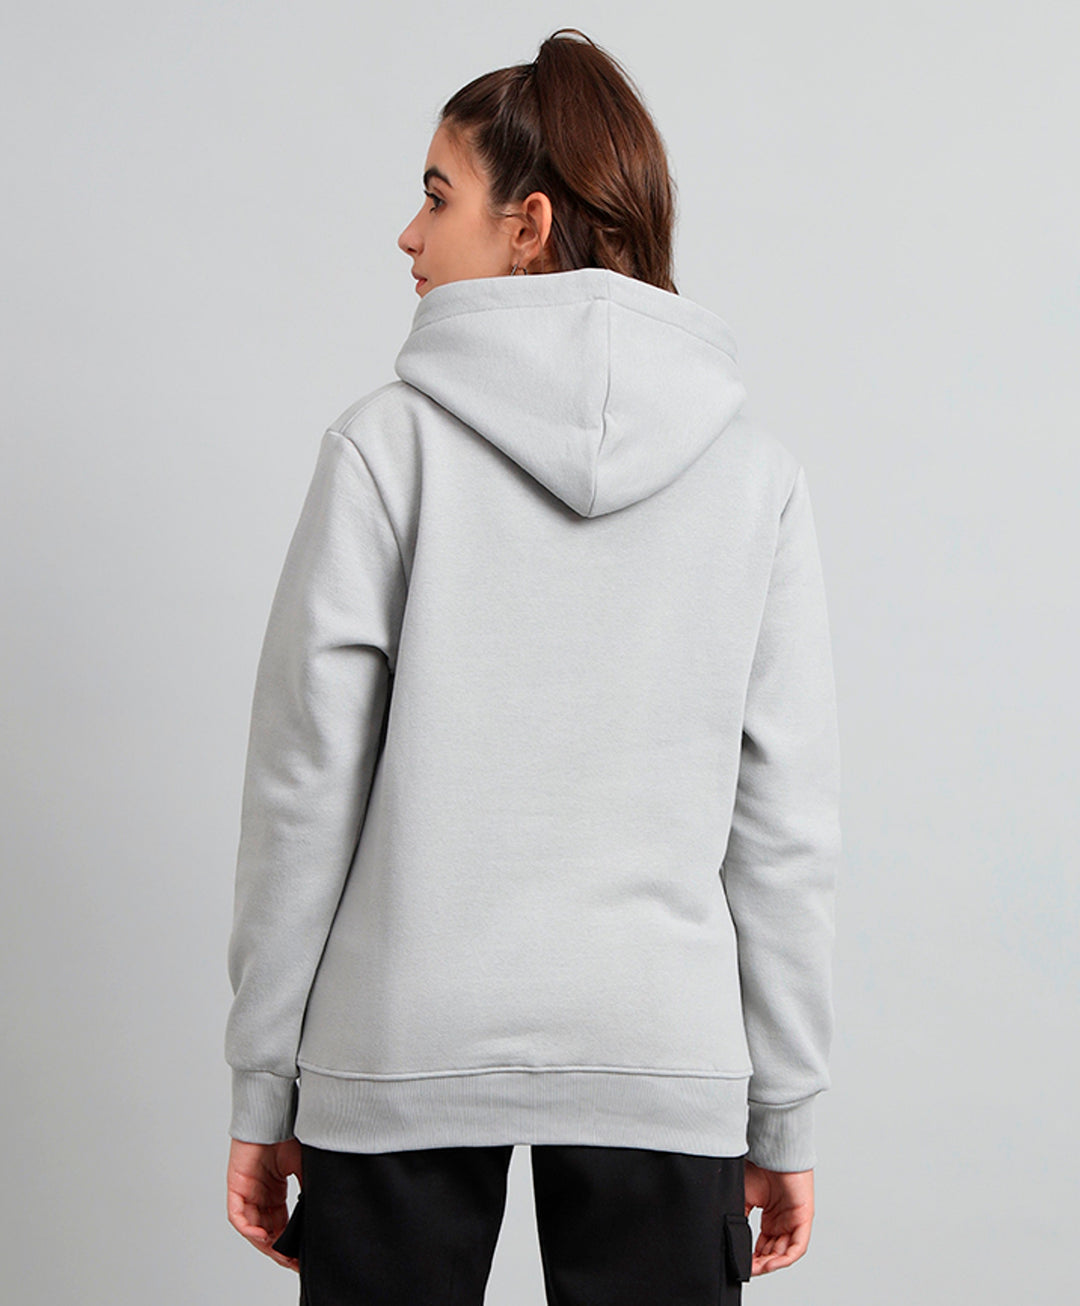 Griffel Women's Steel Grey GriffelXLondon Storm Print Regular Fit 100% Cotton Fleece Hoody Sweatshirt